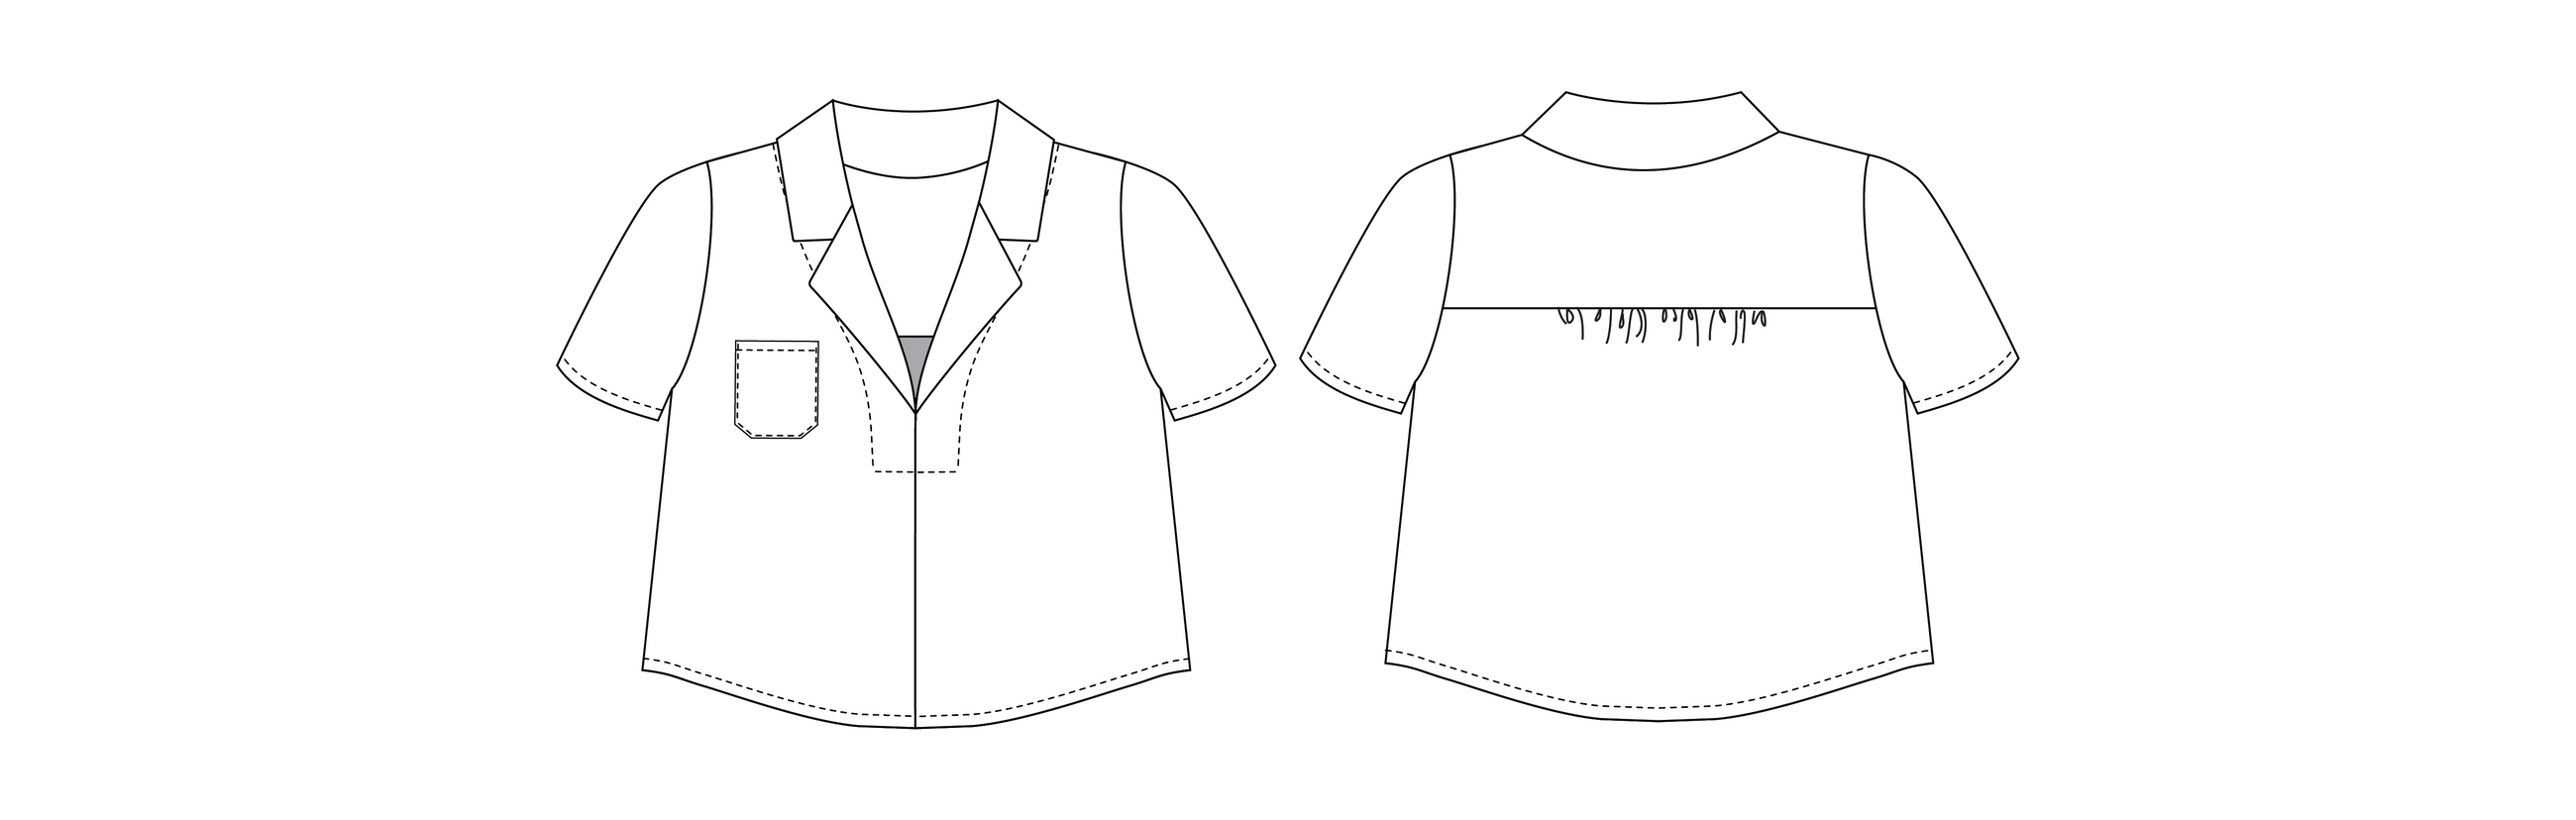 Donny Shirt Printed Pattern – EWE fine fiber goods